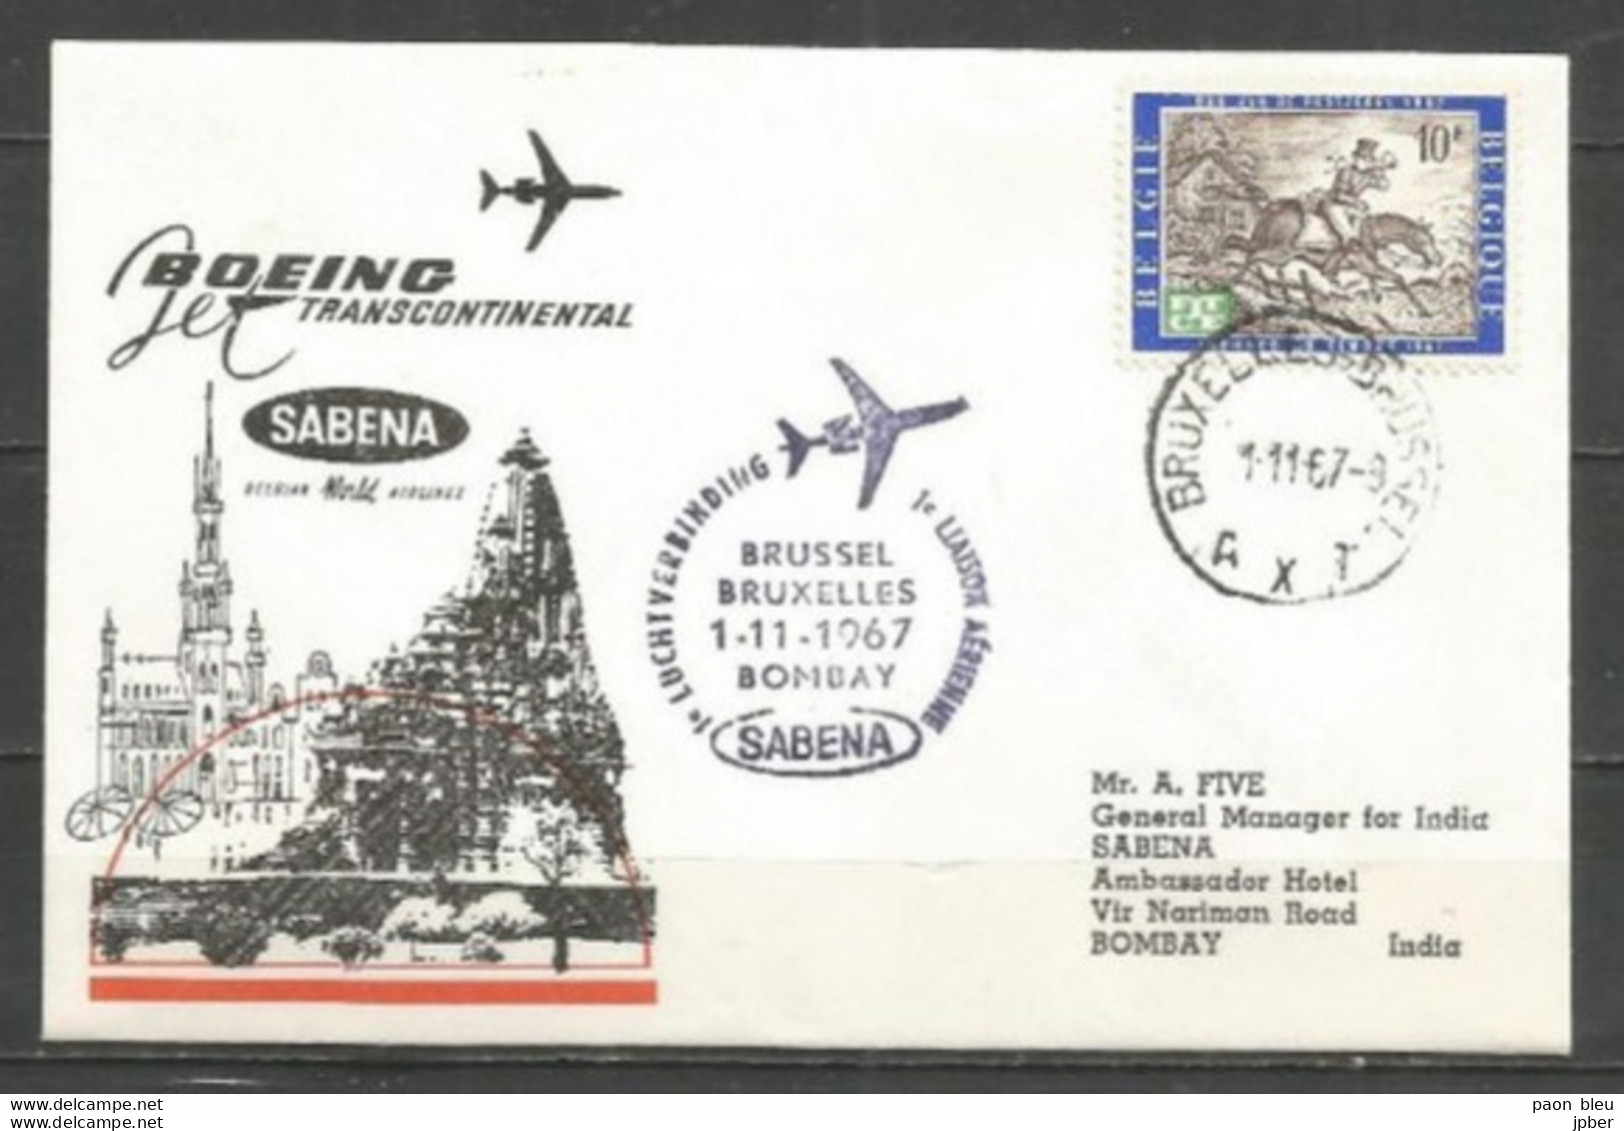 BRUXELLES-BOMBAY 1-11-1967 - Sabena Boeing - Timbres Belgique Postillon - Vliegtuigen